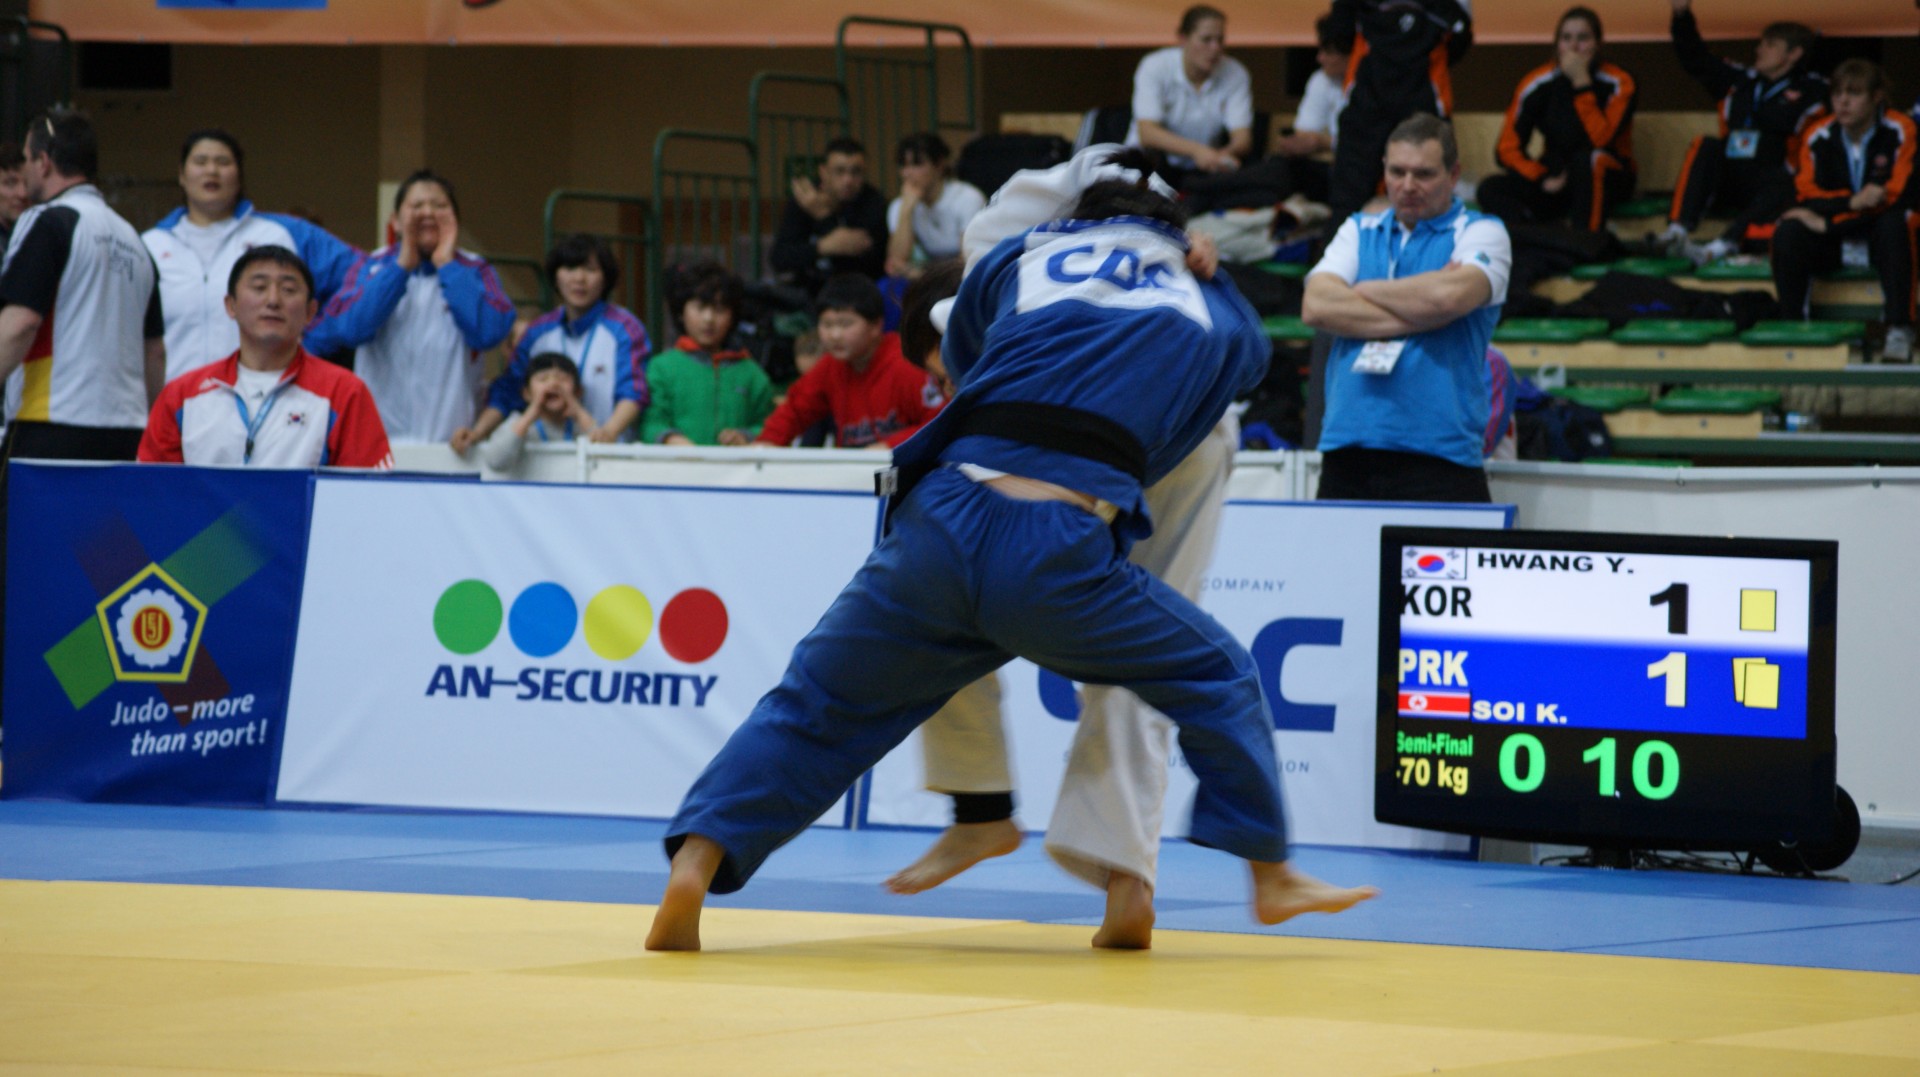 Puchar Swiata Judo Warszawa 2012 (850).JPG